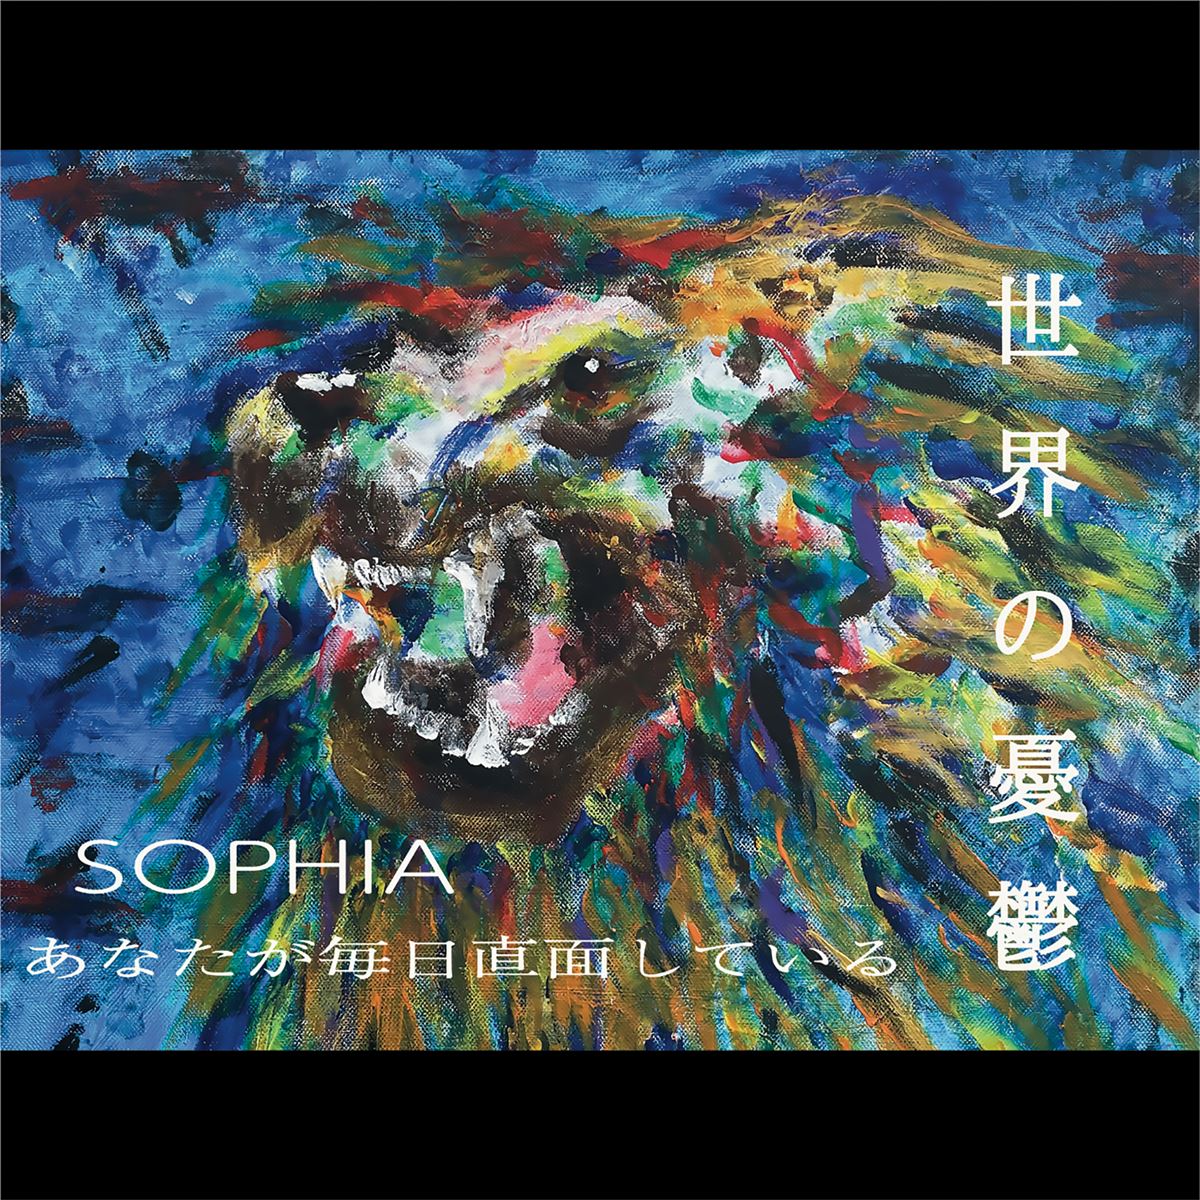 SOPHIA、18年ぶりのライブシリーズ『獅子に翼 V』開催 10年ぶりの新曲